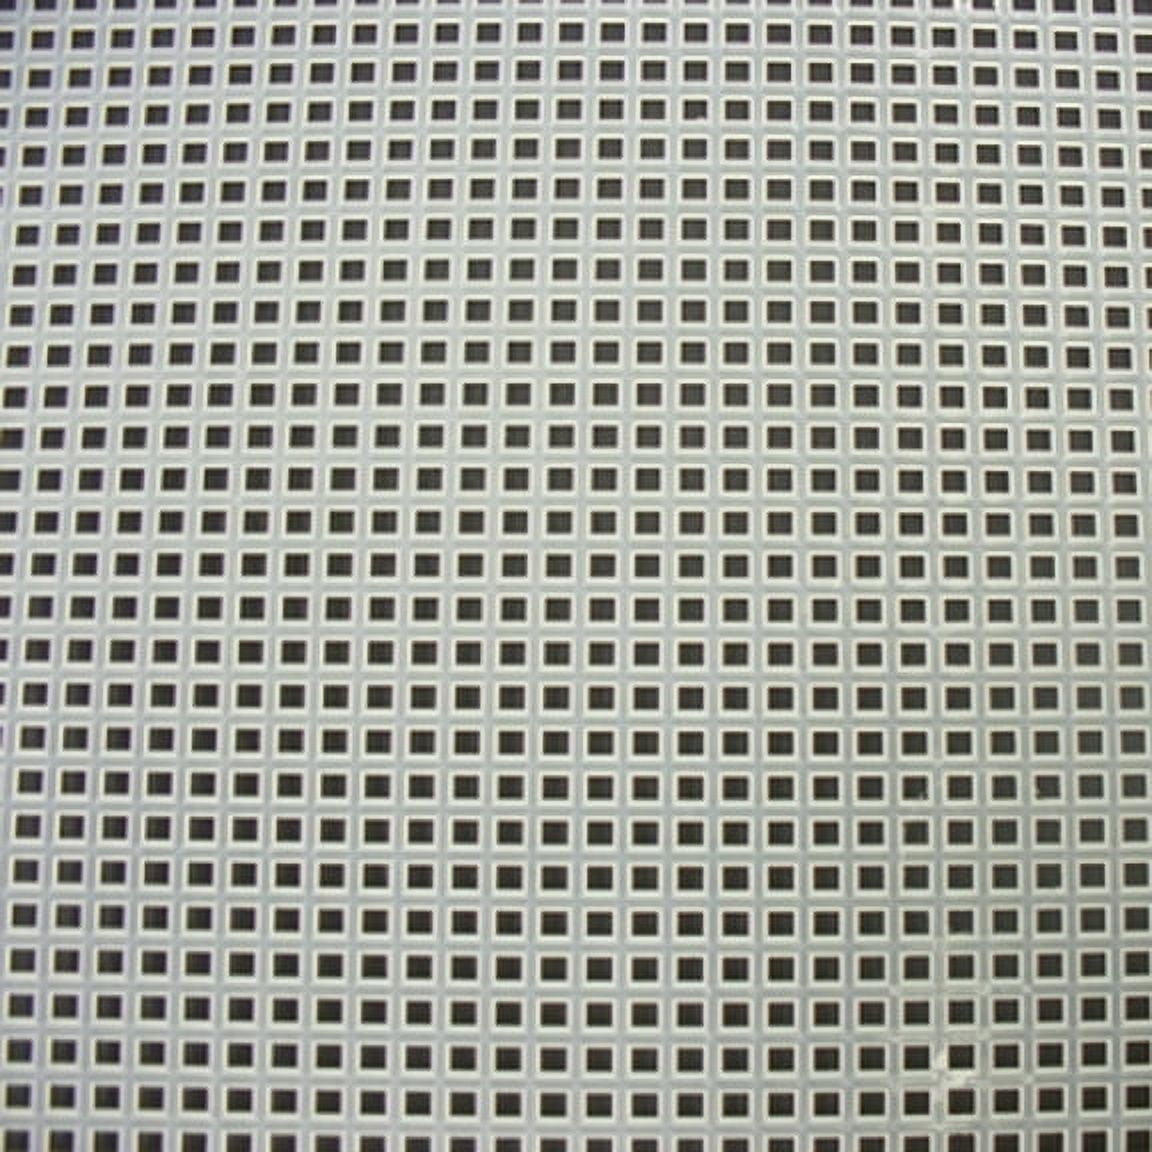 25pcs Mesh Plastic Canvas Sheet Cross Stitch Sewing Plastic Canvas Sheets 